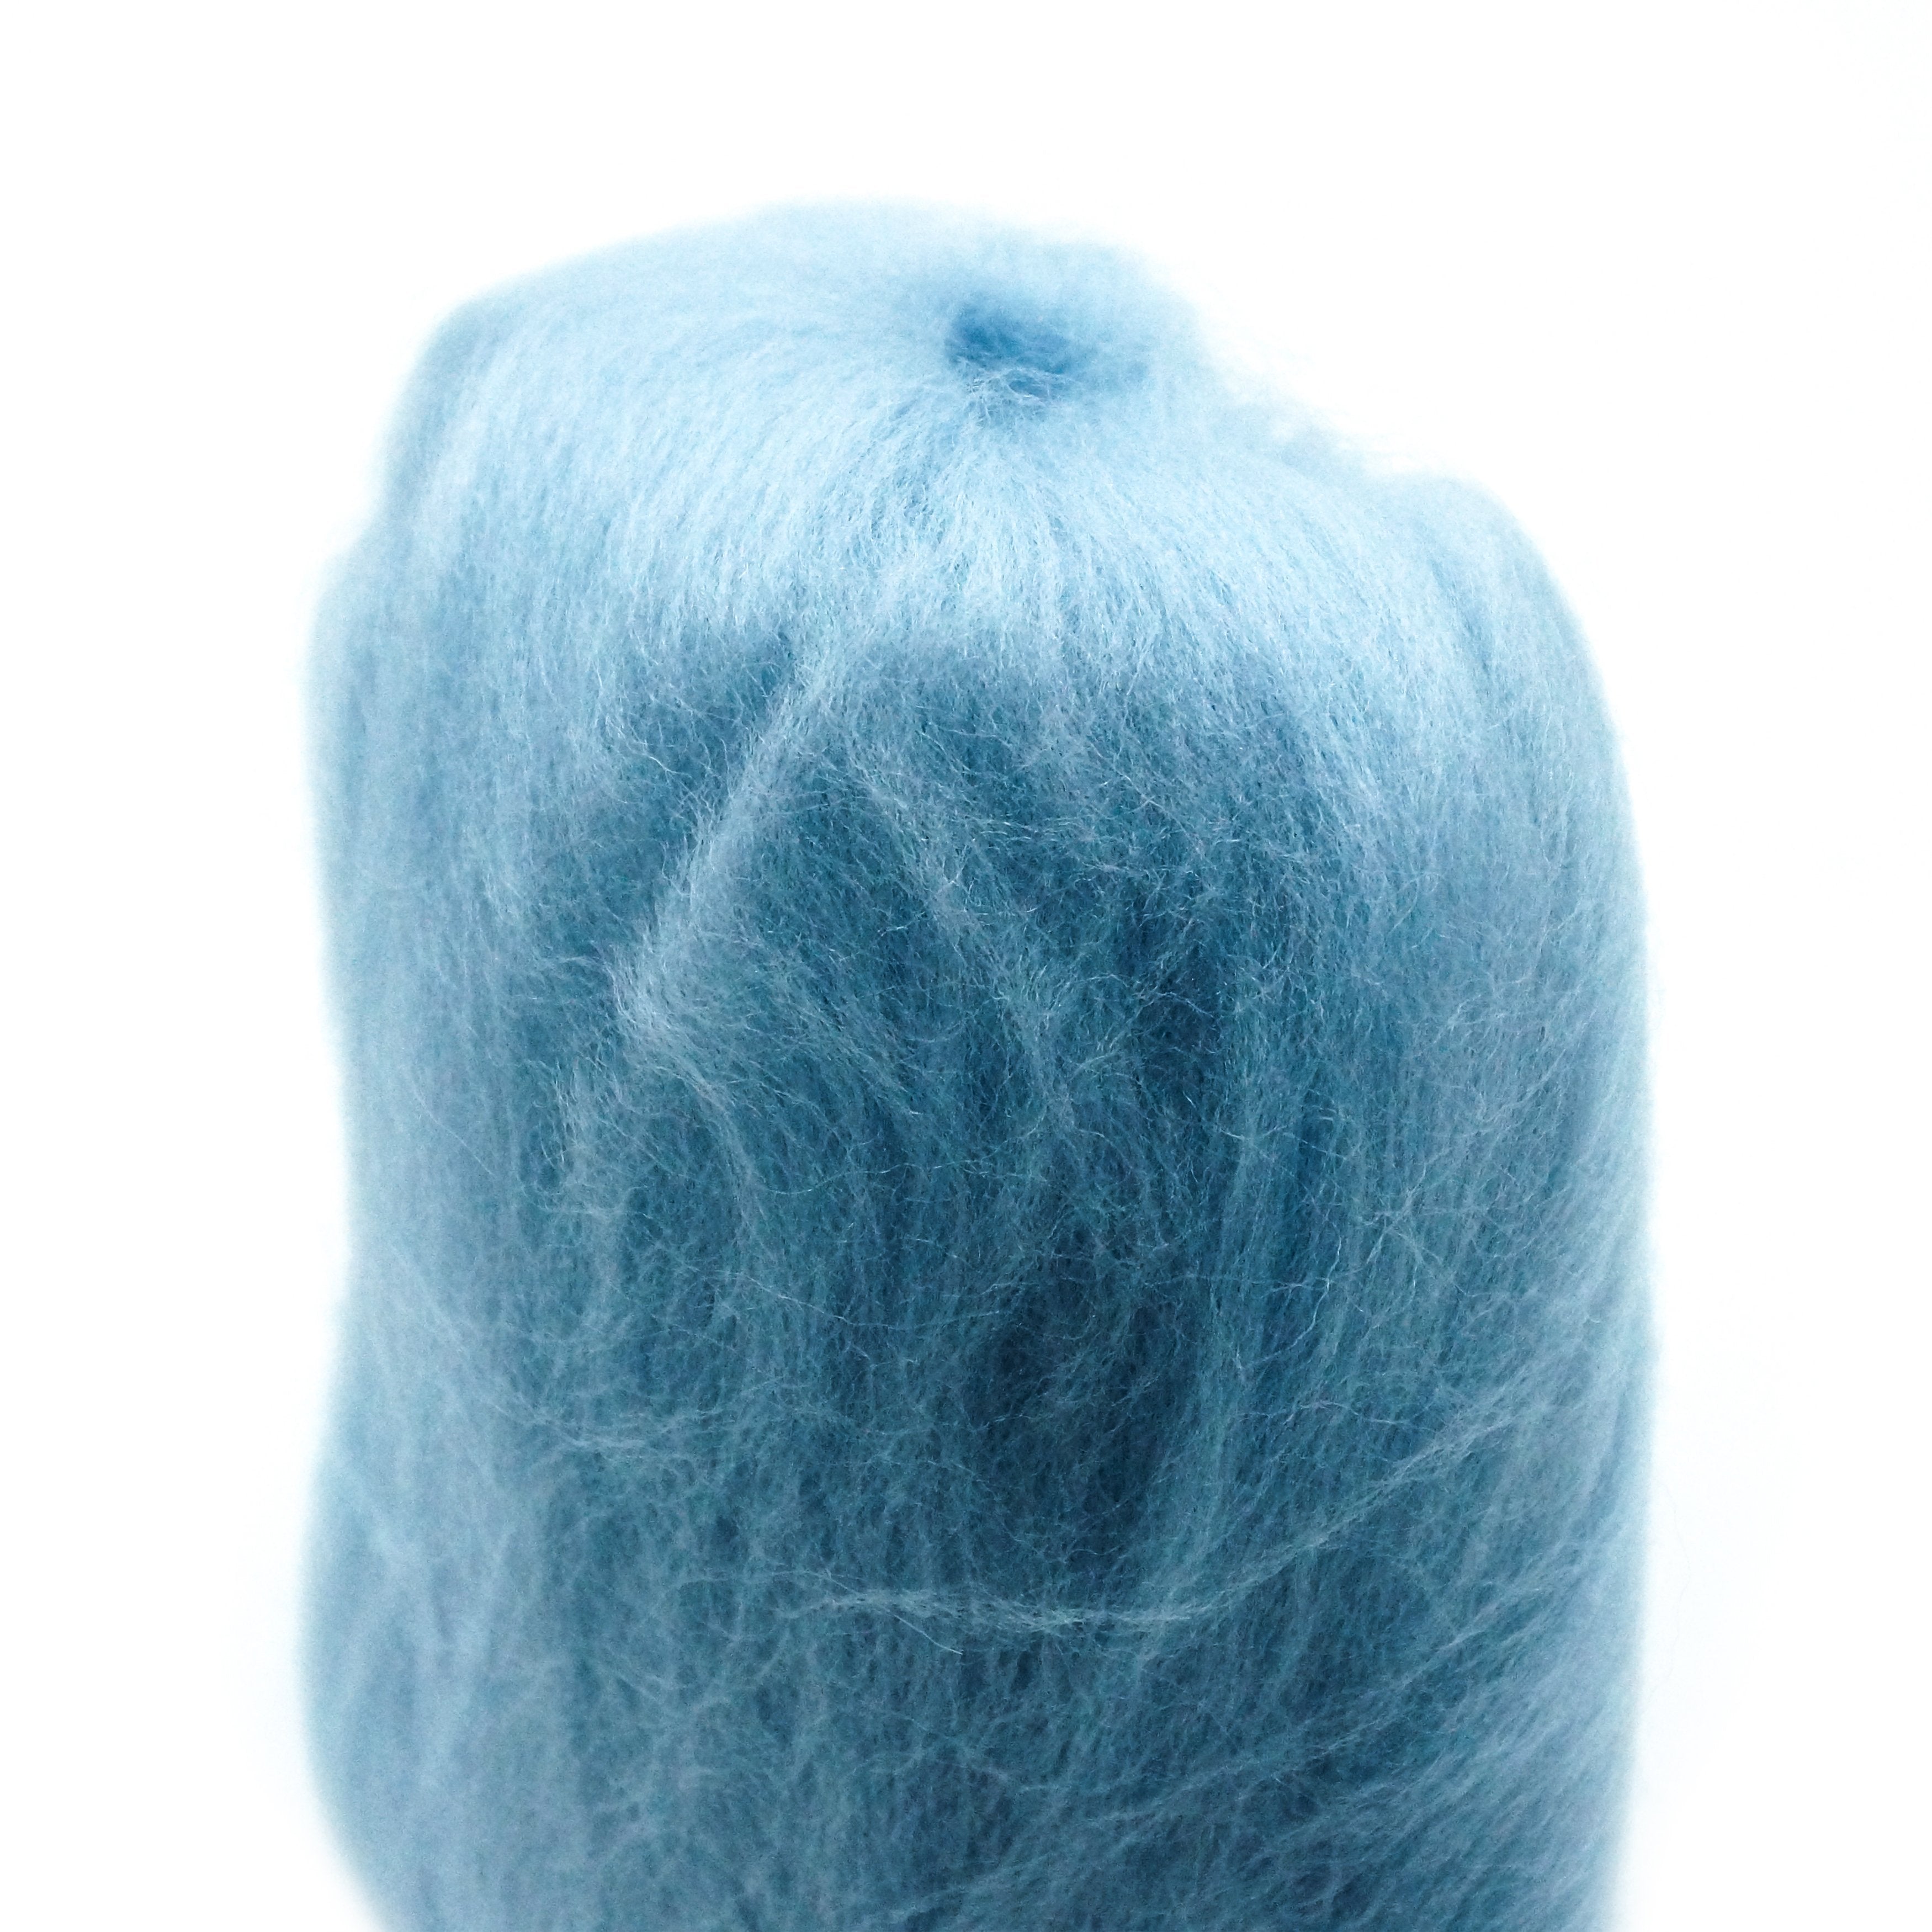 CLV - Natural Wool Roving (Light Blue)